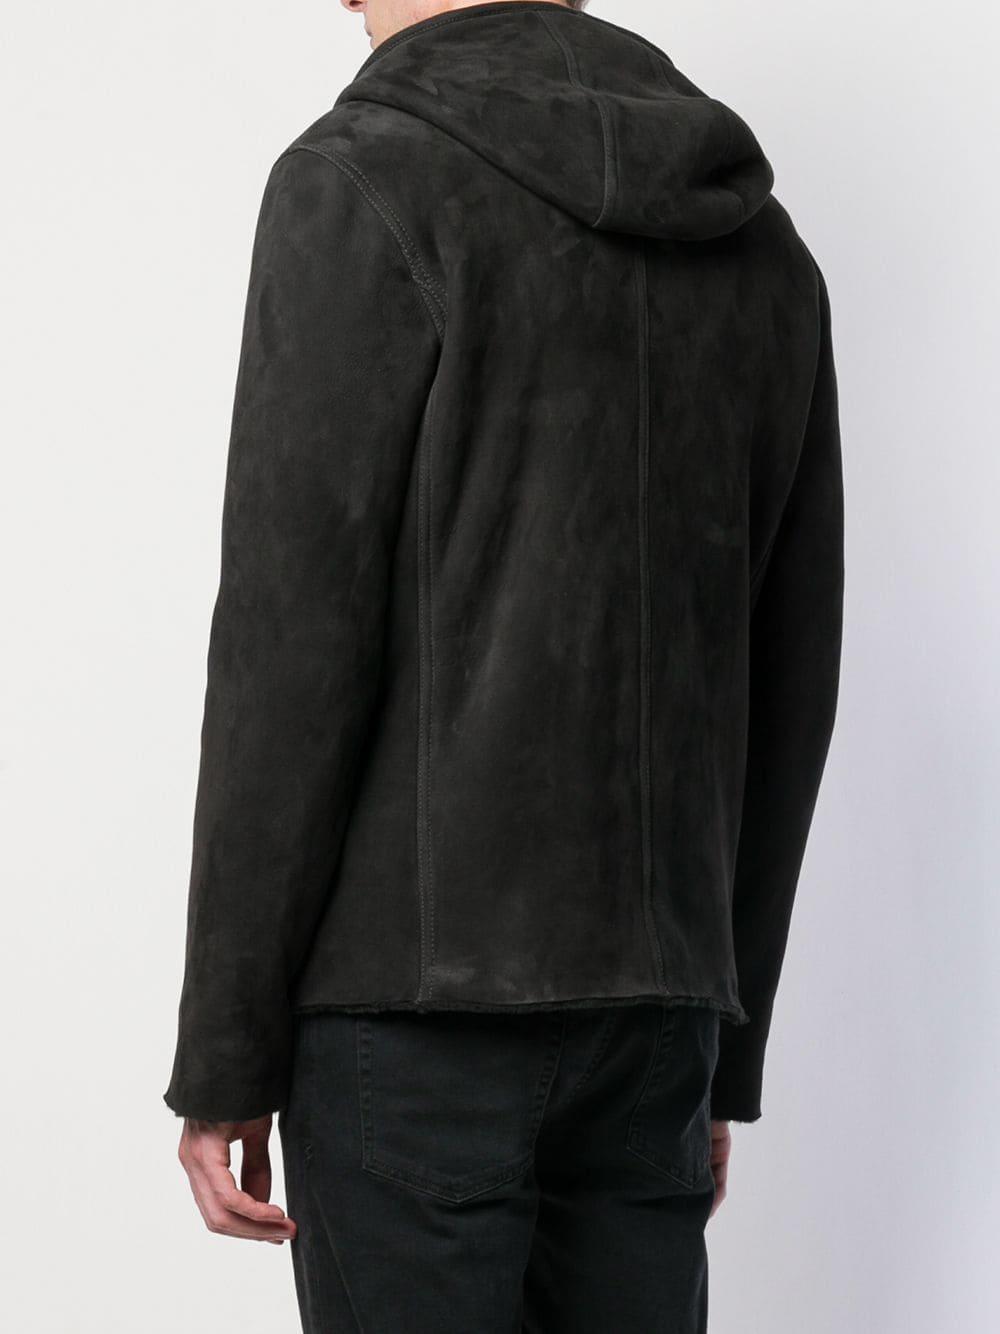 Giorgio Brato Dark Eagle Hooded Jacket in Black for Men - Lyst